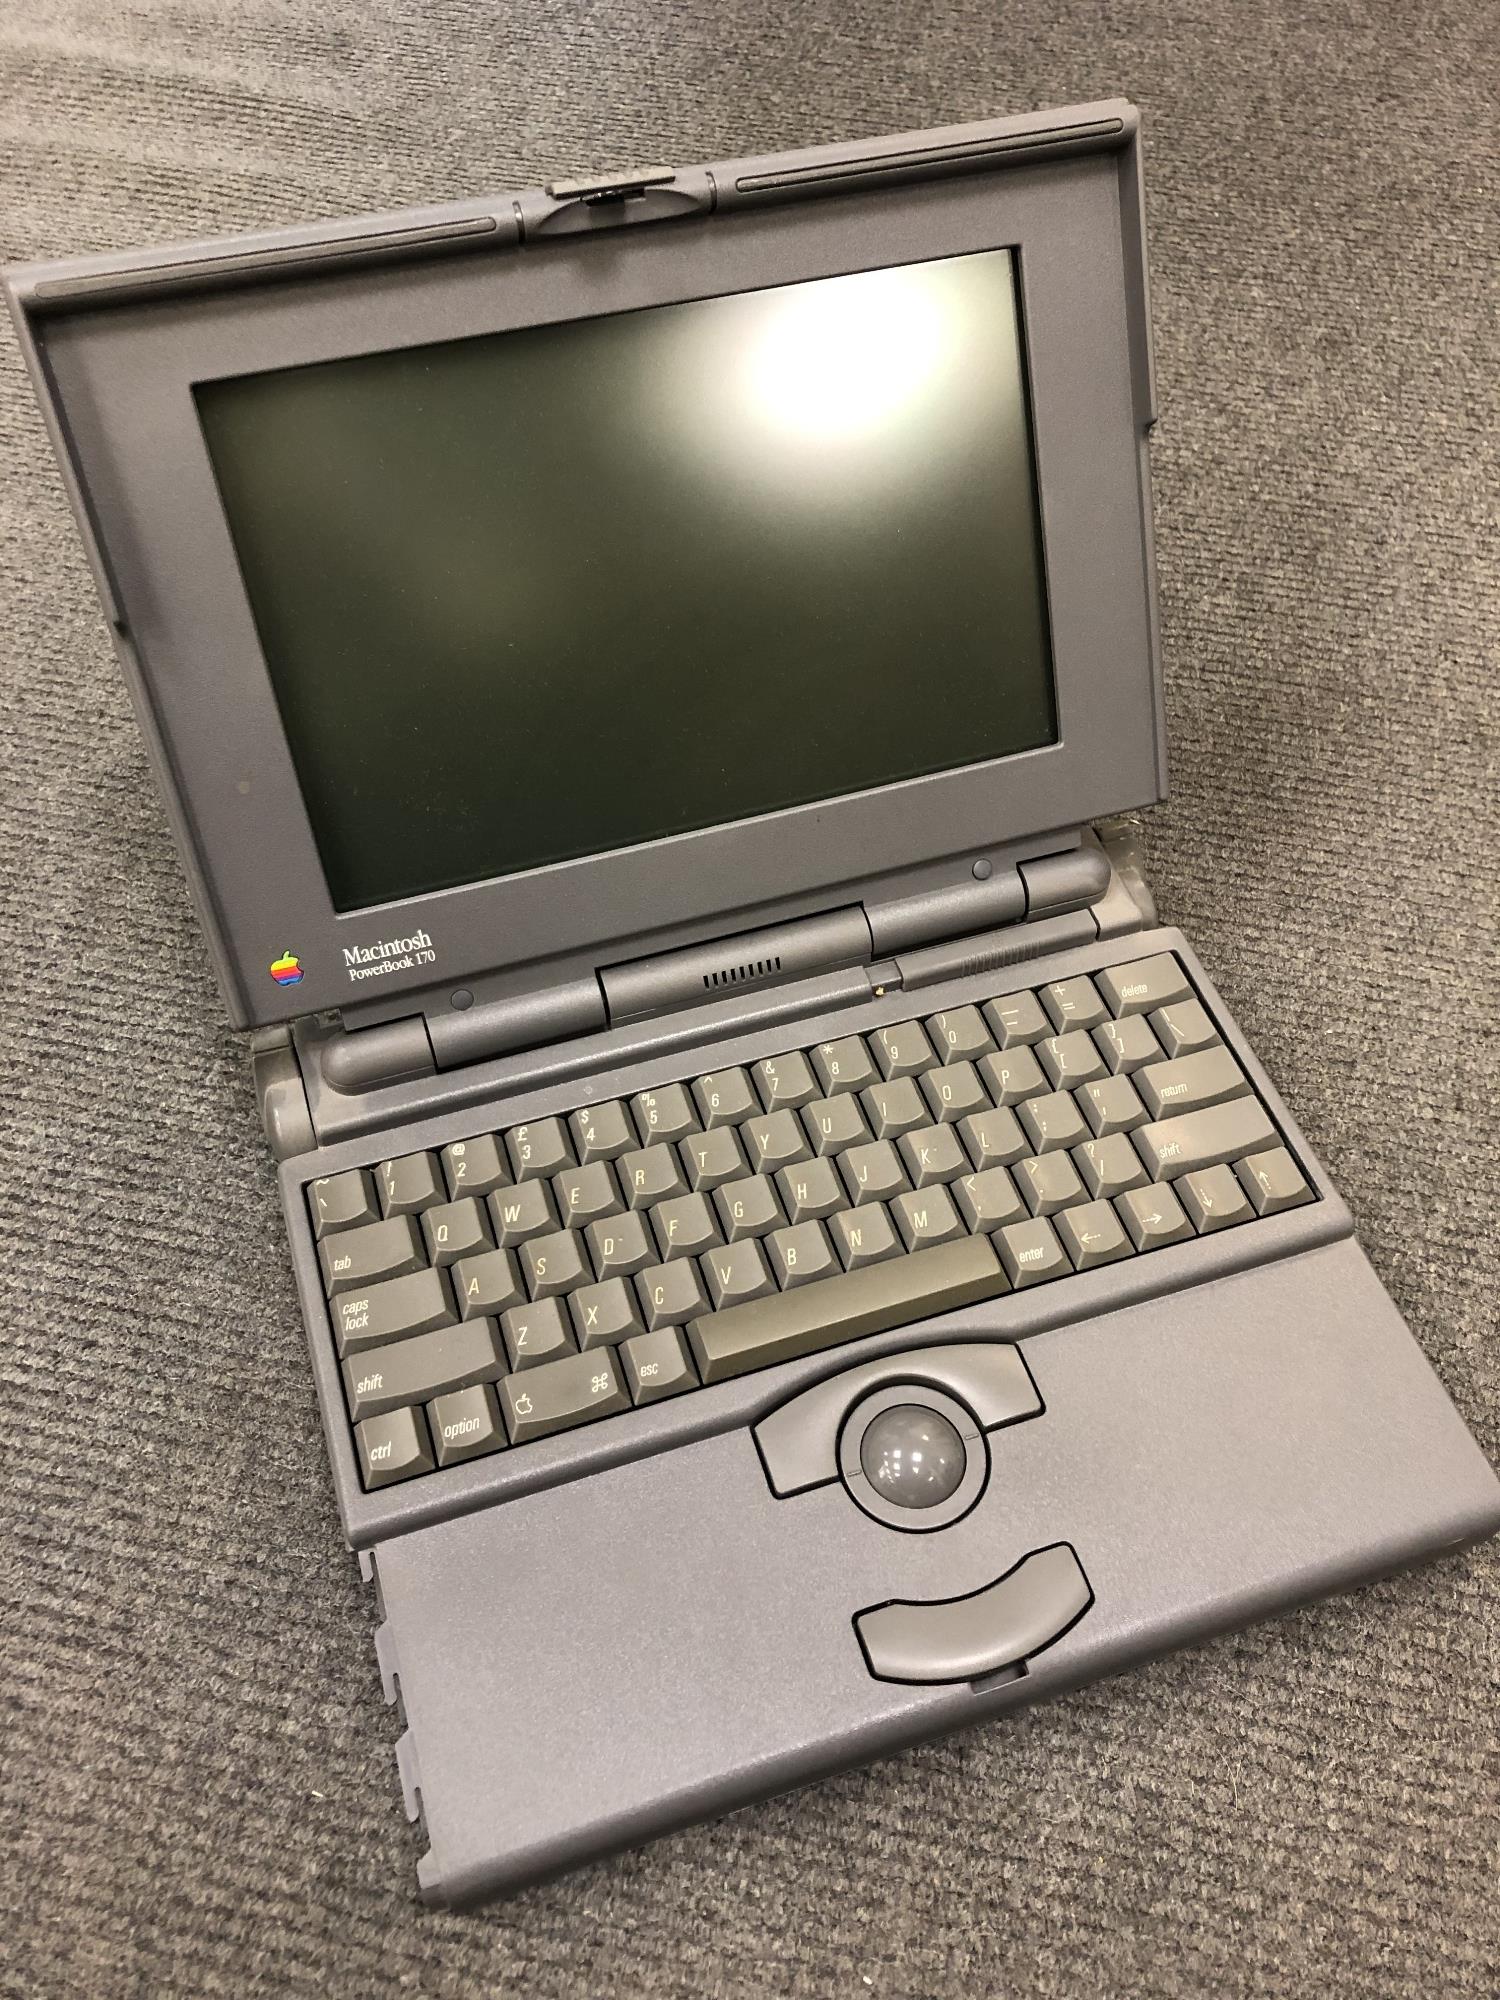 Am early Macintosh portable computer - PowerBook 170.